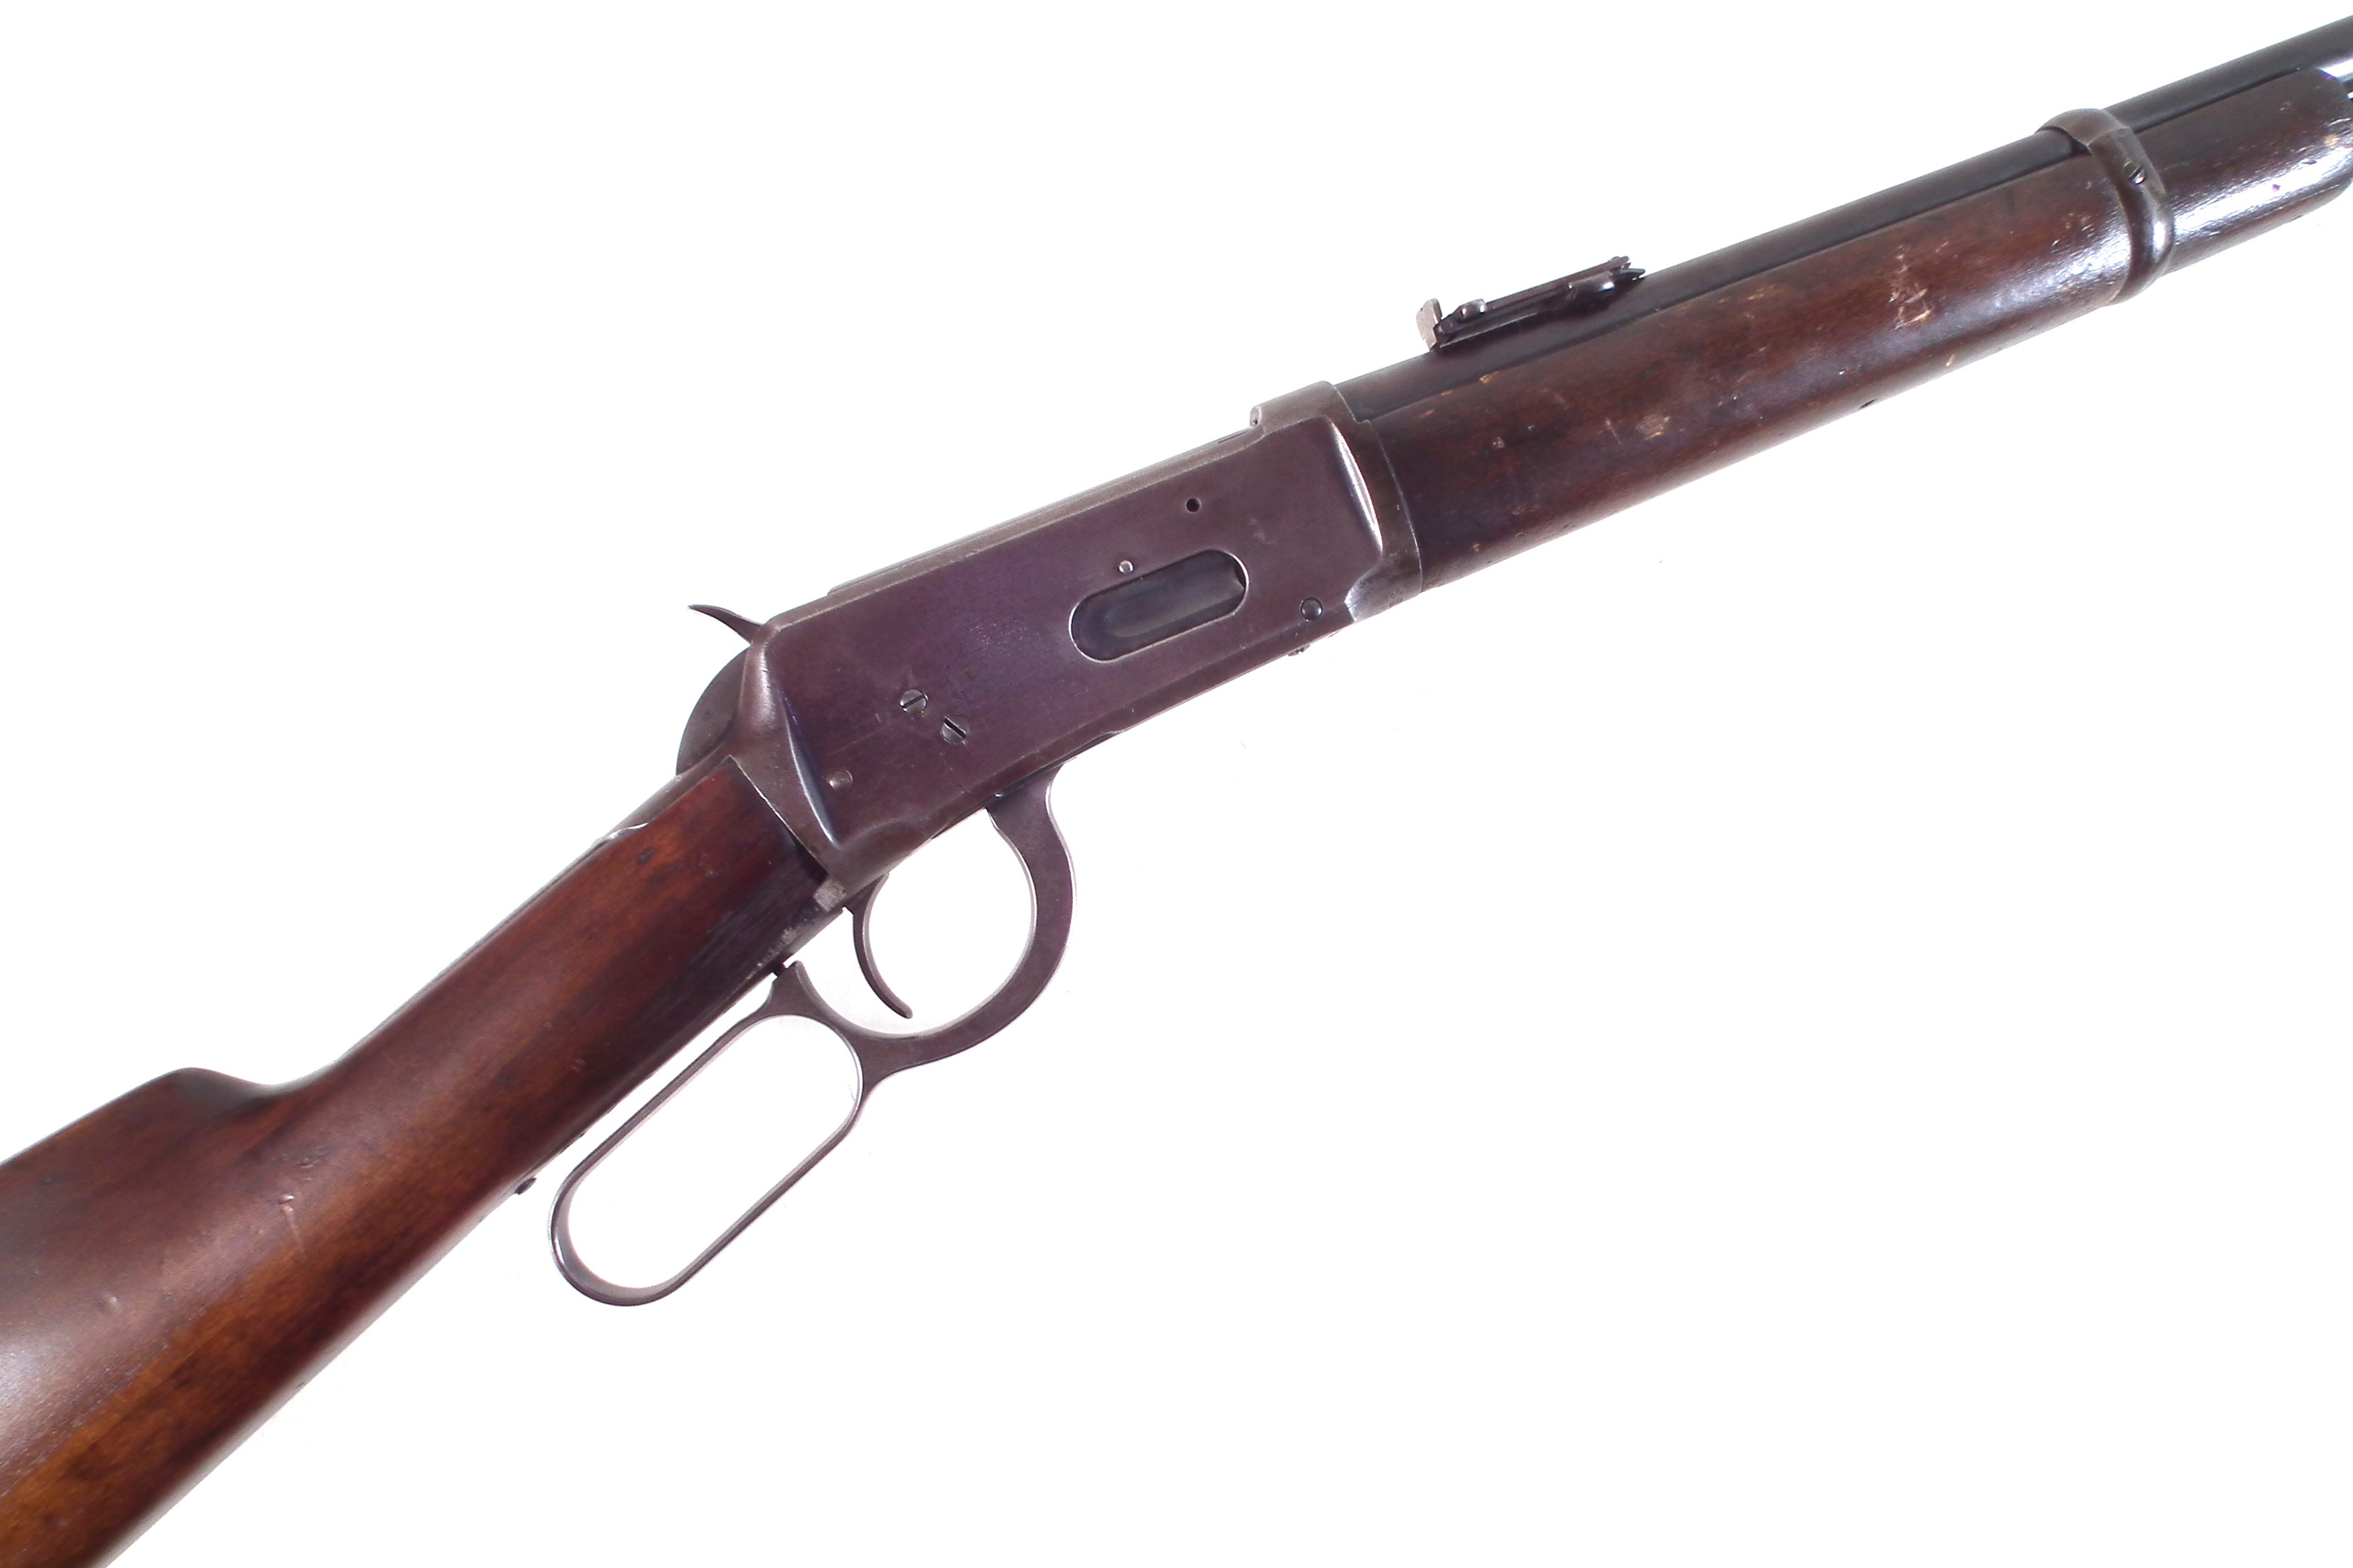 Winchester Rifles